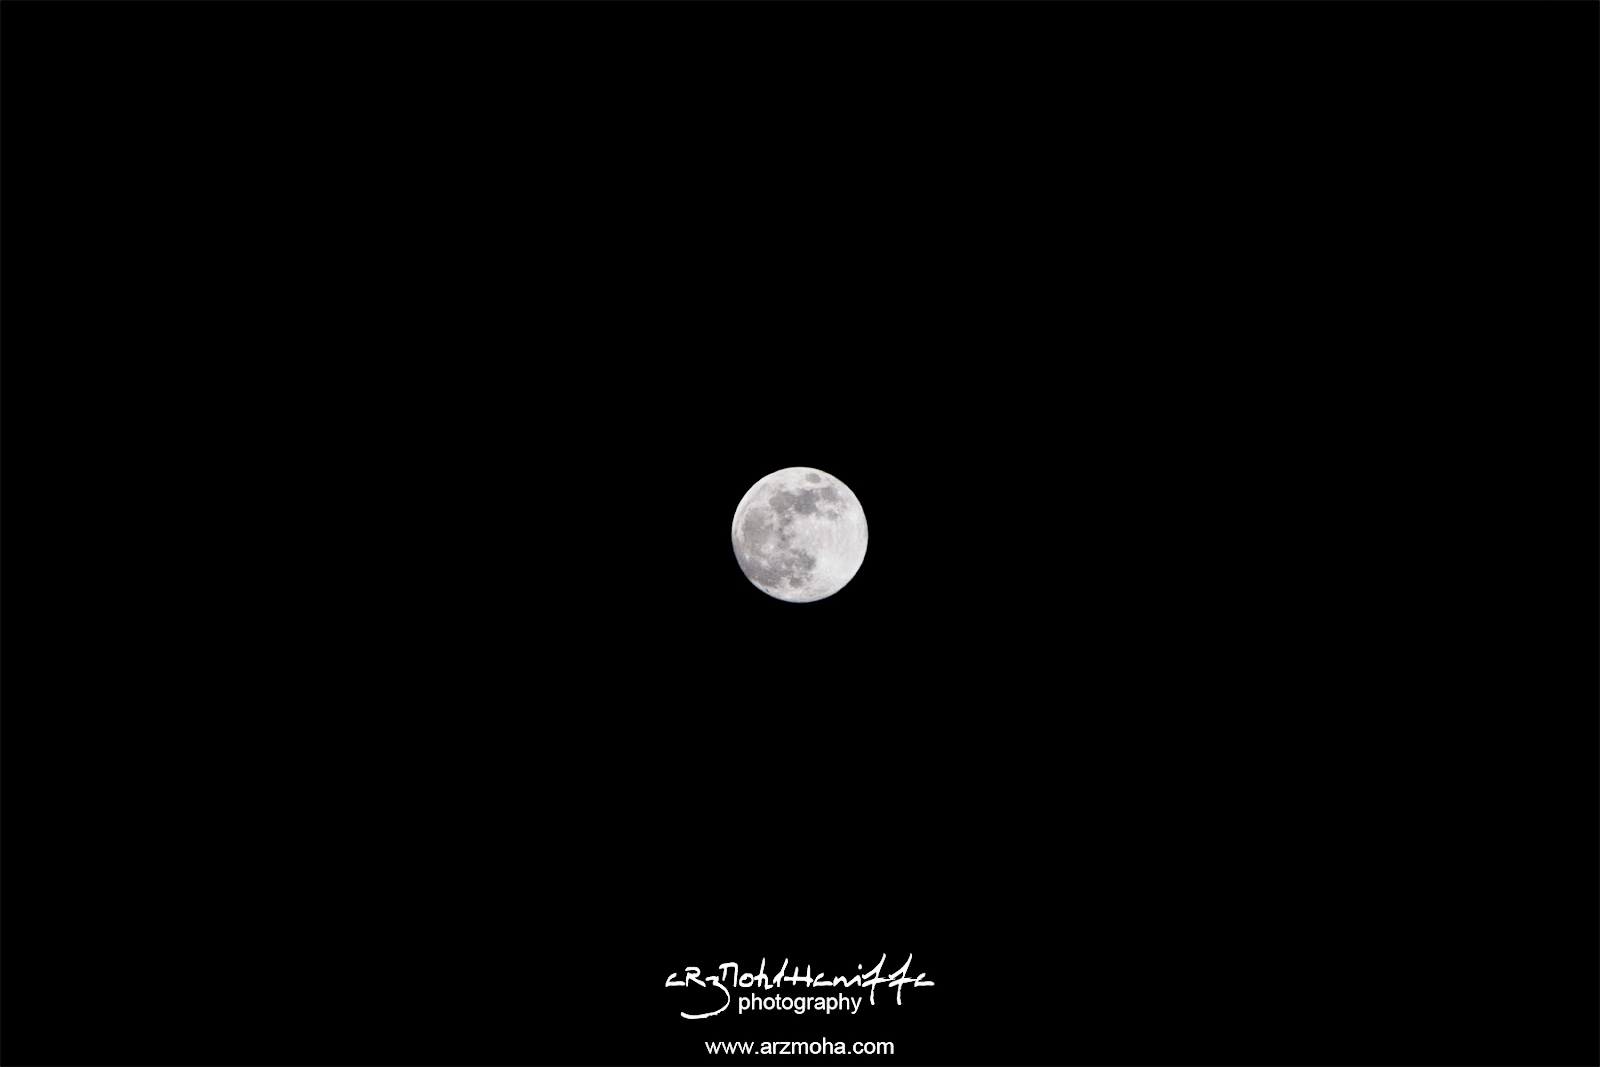 Bulan penuh, full moon, indahnya bulan, jangan jadi seperti bulan, arzmoha.com, gambar cantik, arzmohdhaniffa photography